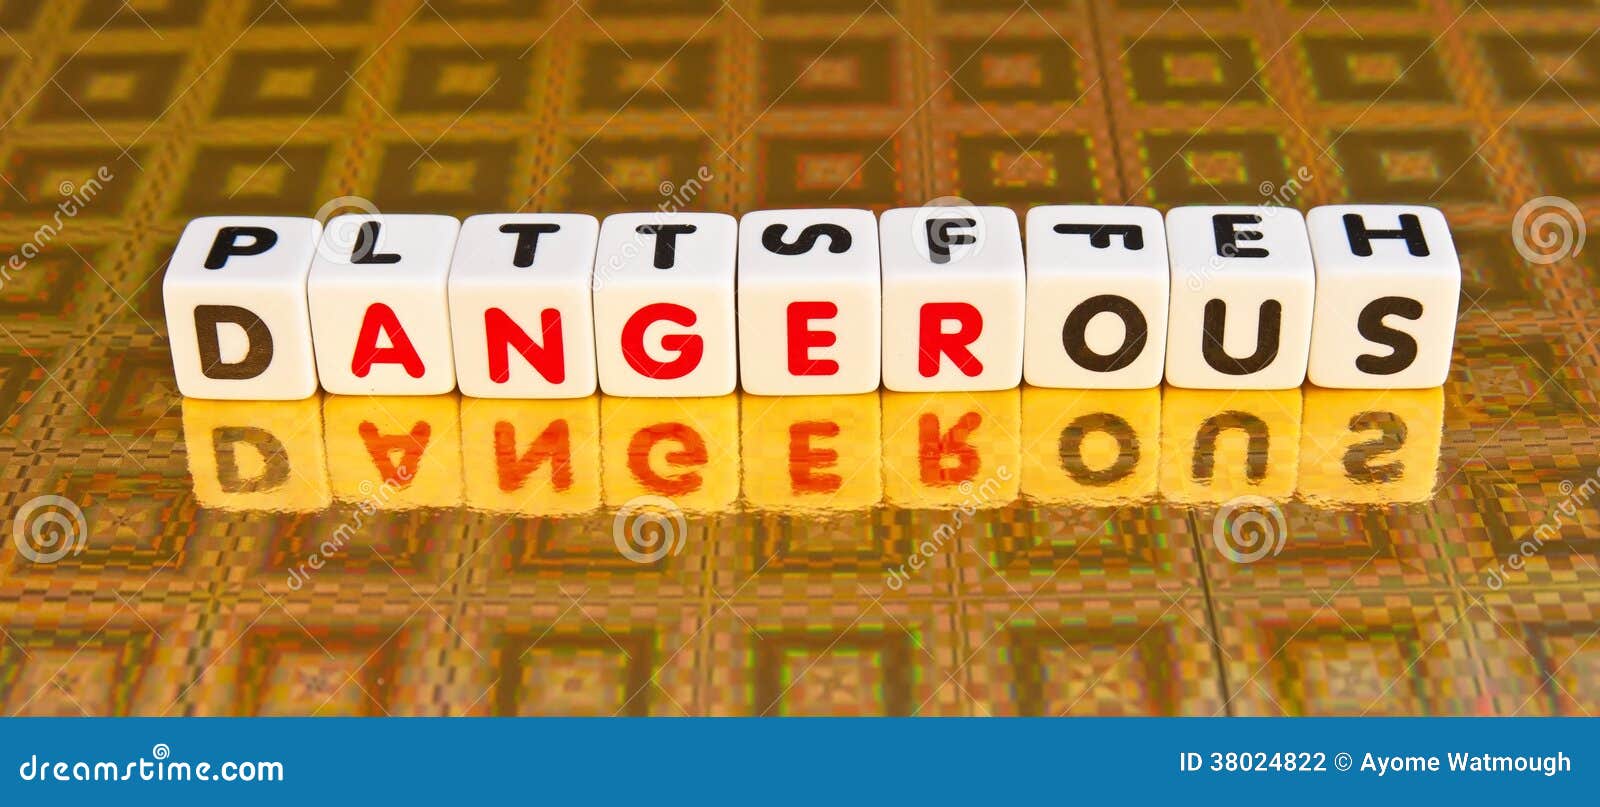 anger is dangerous